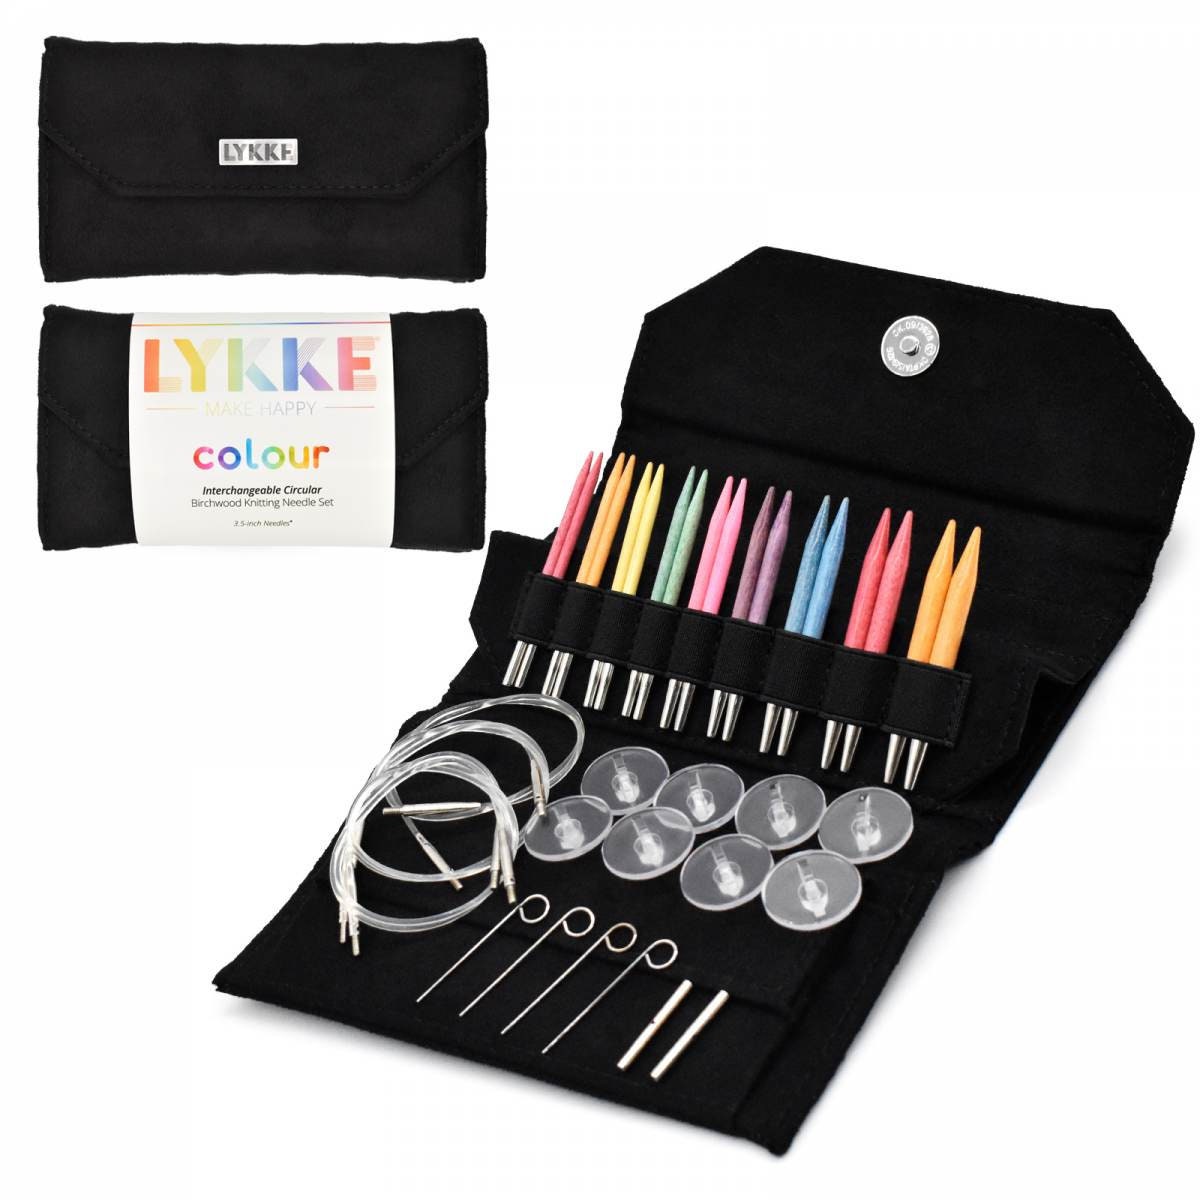 LYKKE Knitting Needles - Colour 3.5" Interchangeable Circular Needle Set - Black Vegan Suede